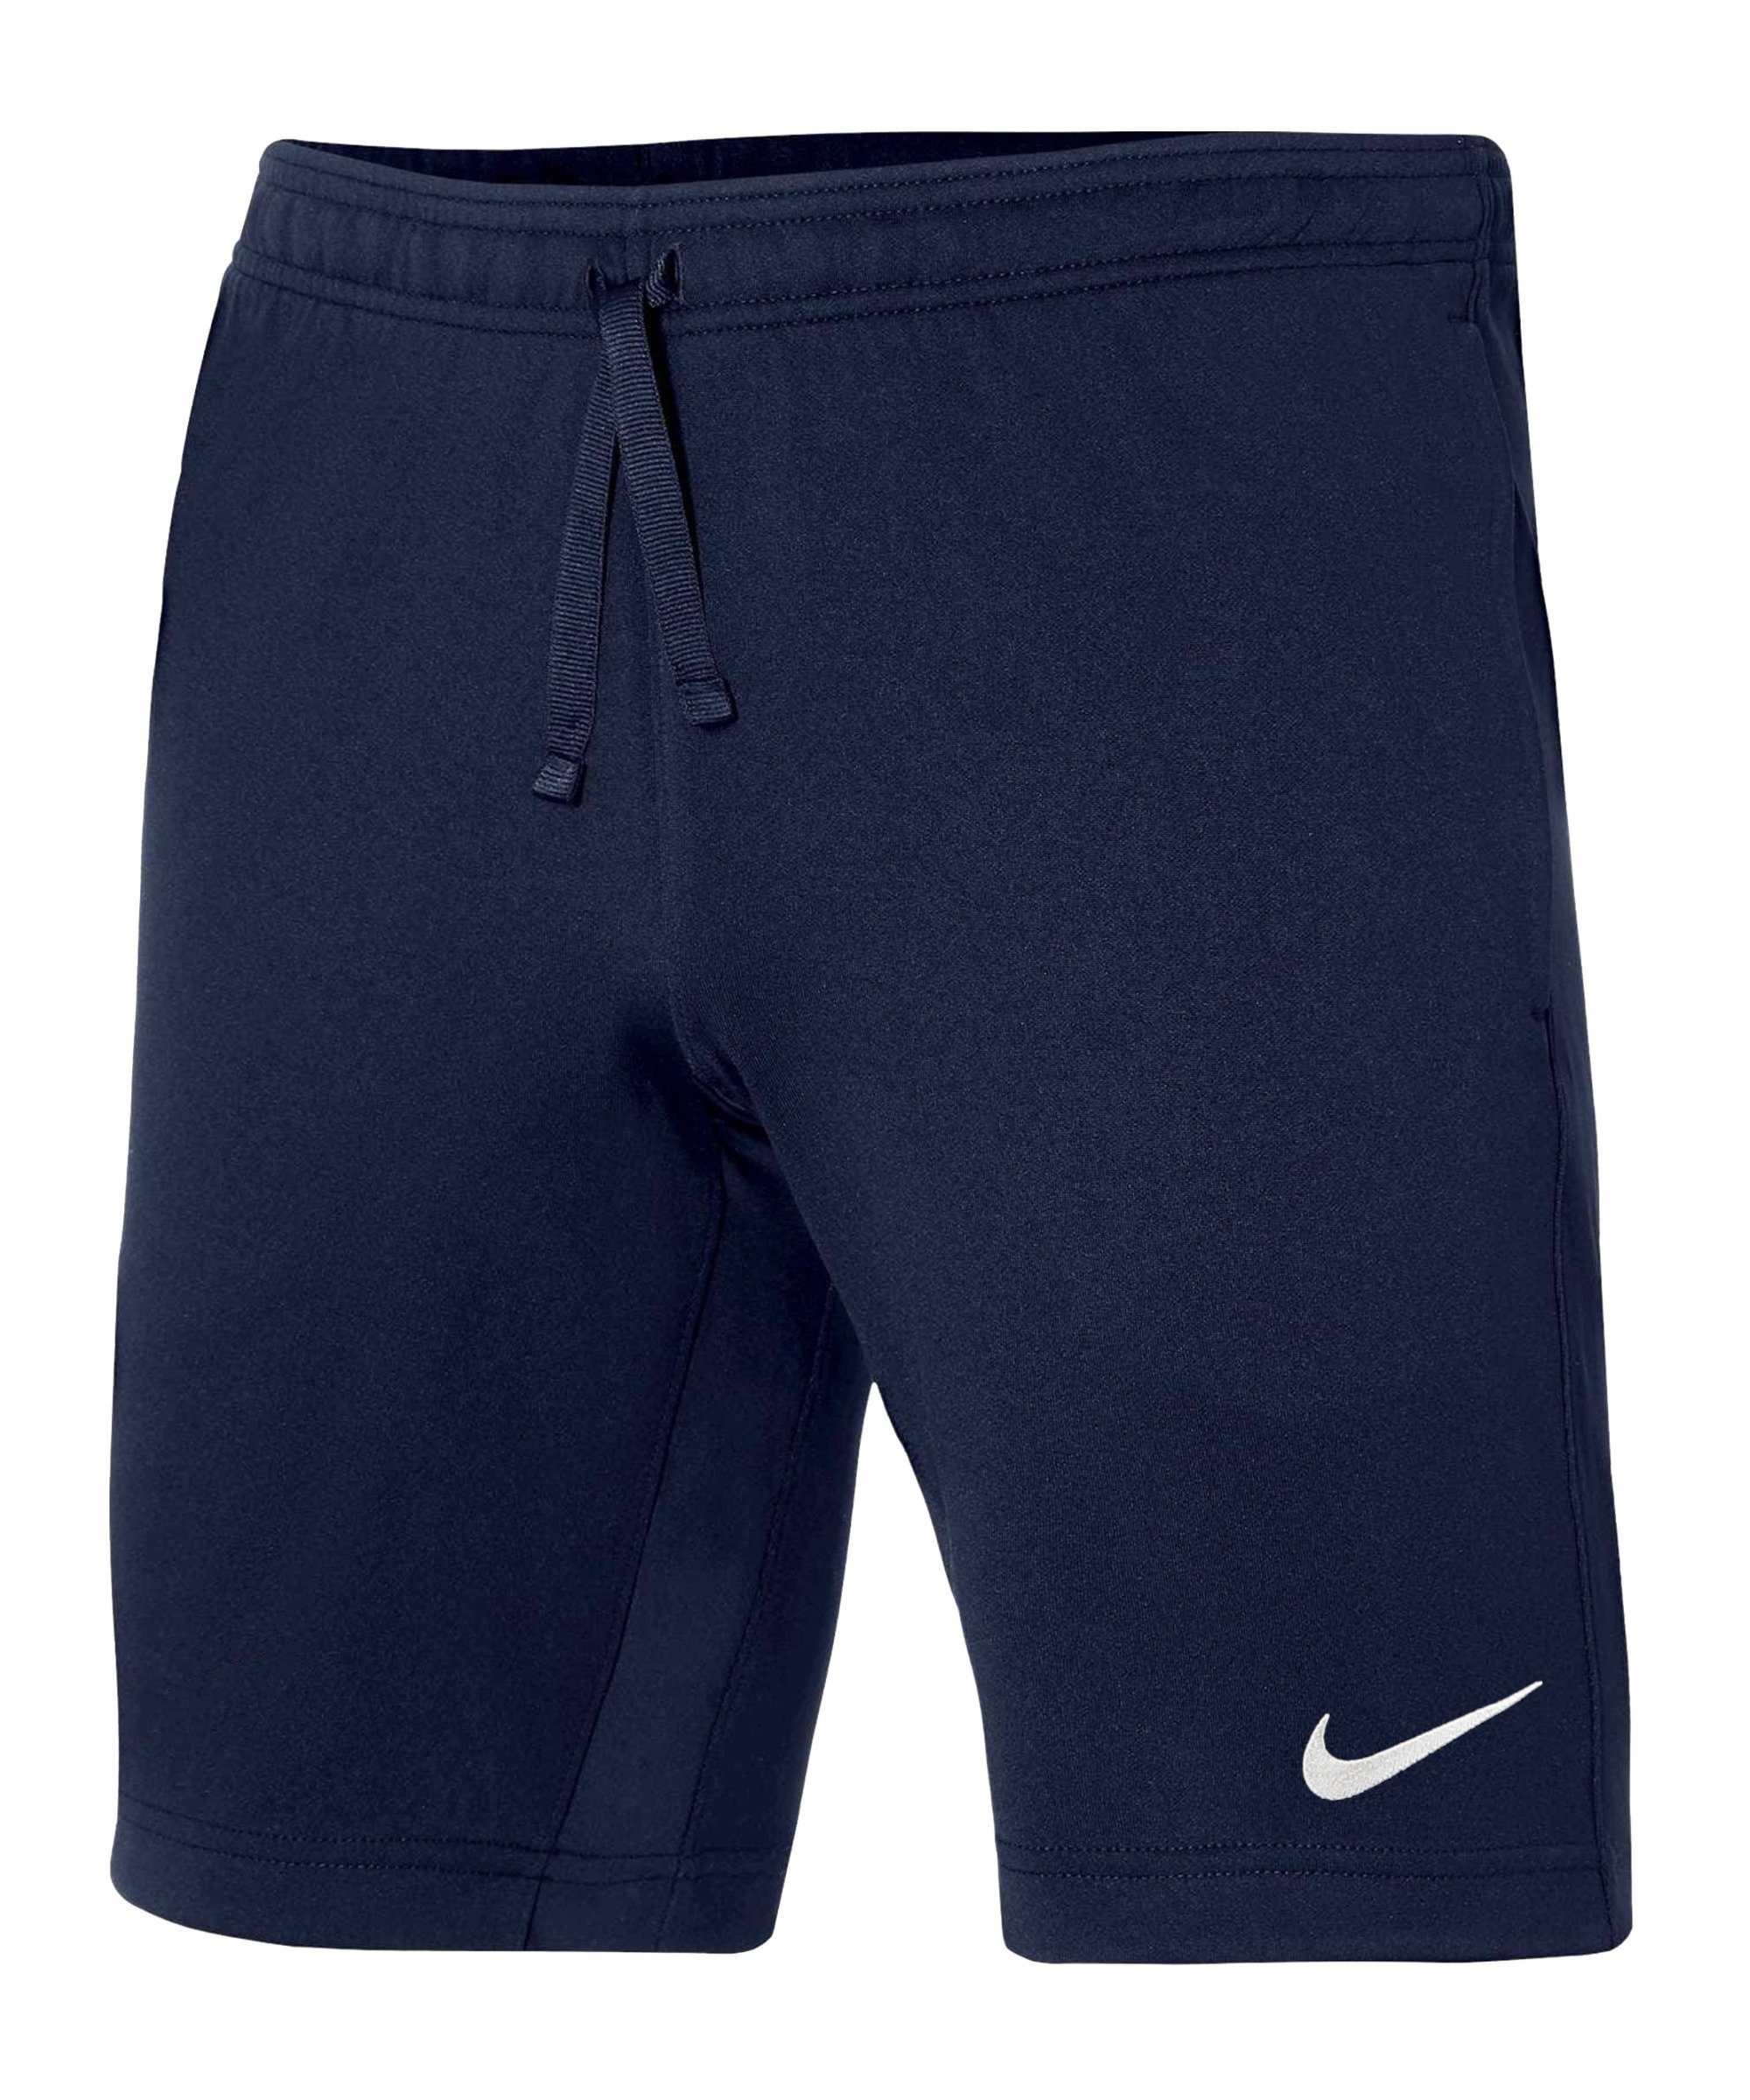 Express Nike Sporthose 22 Strike blauweiss Short